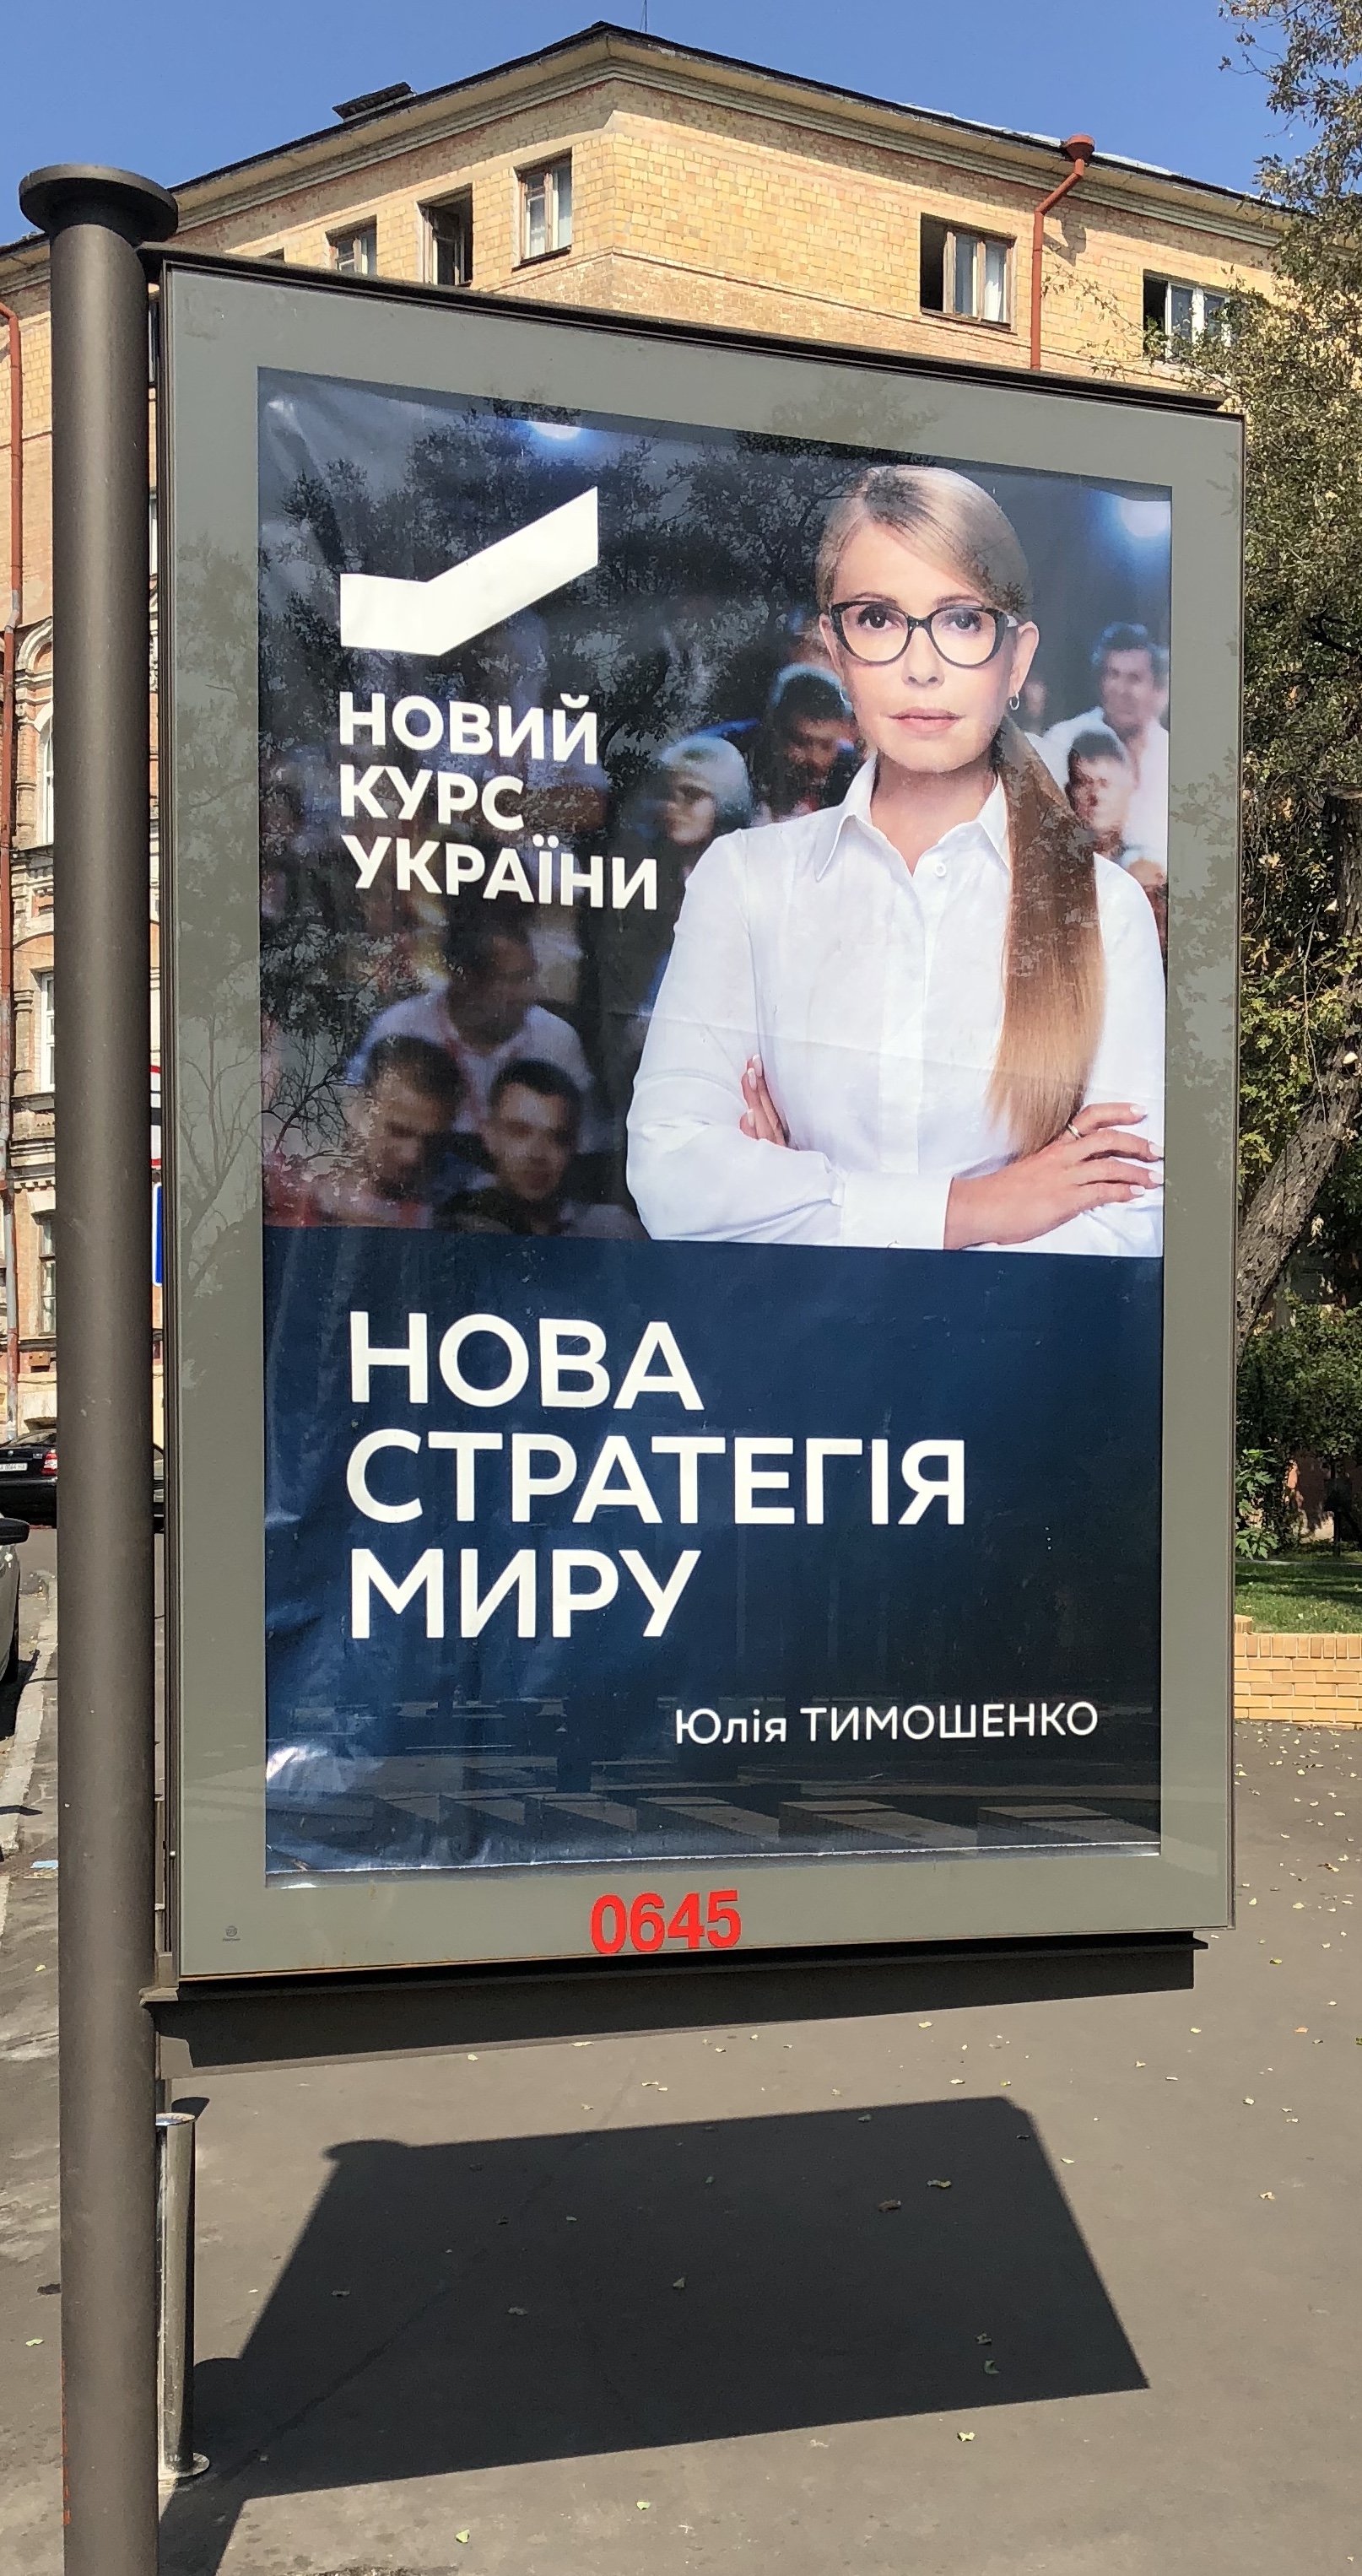 2018 billboard for Yulia Tymoshenko in Kiev. (Wikimedia Commons) 